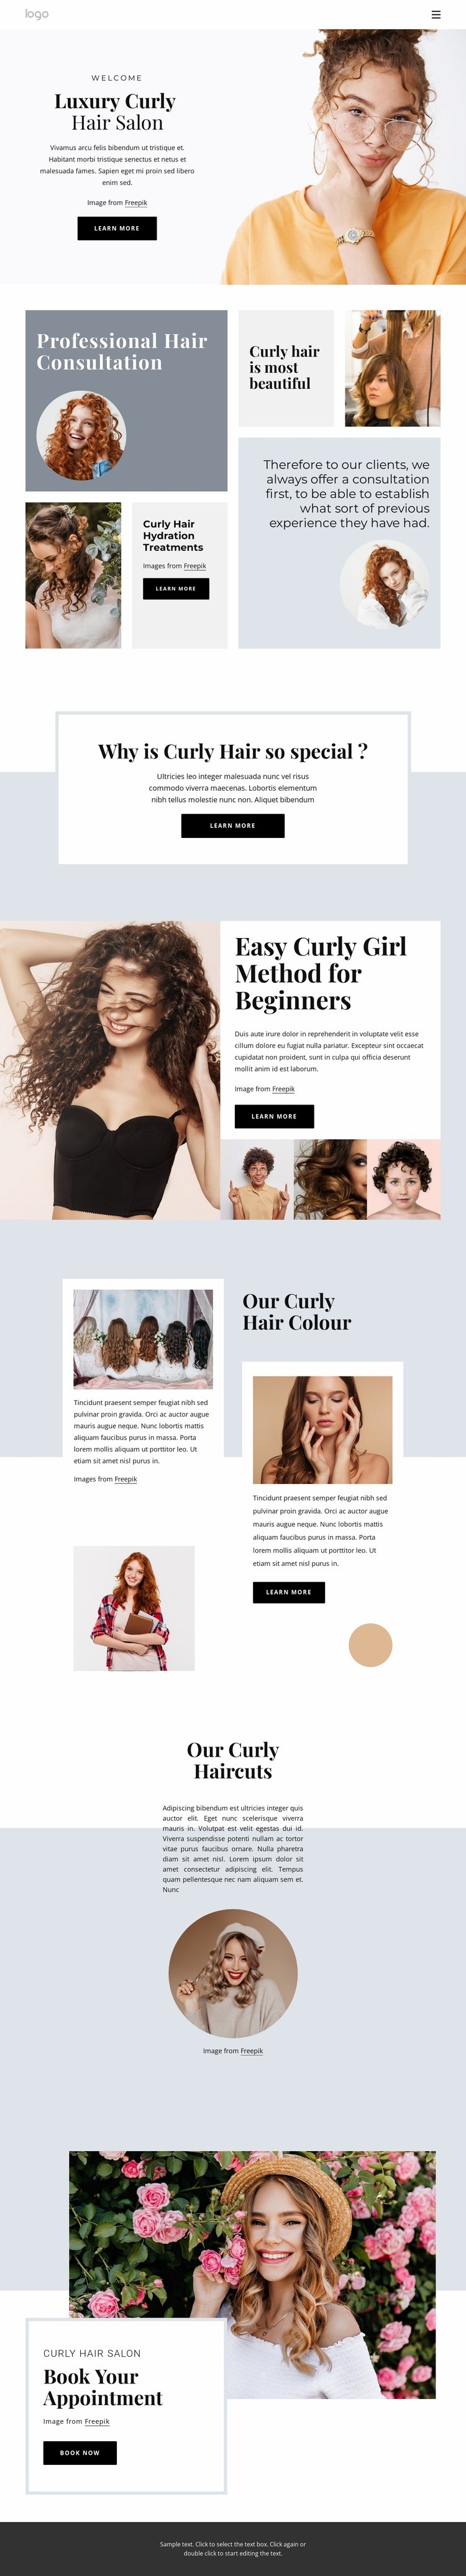 Curly hair salon Web Page Design